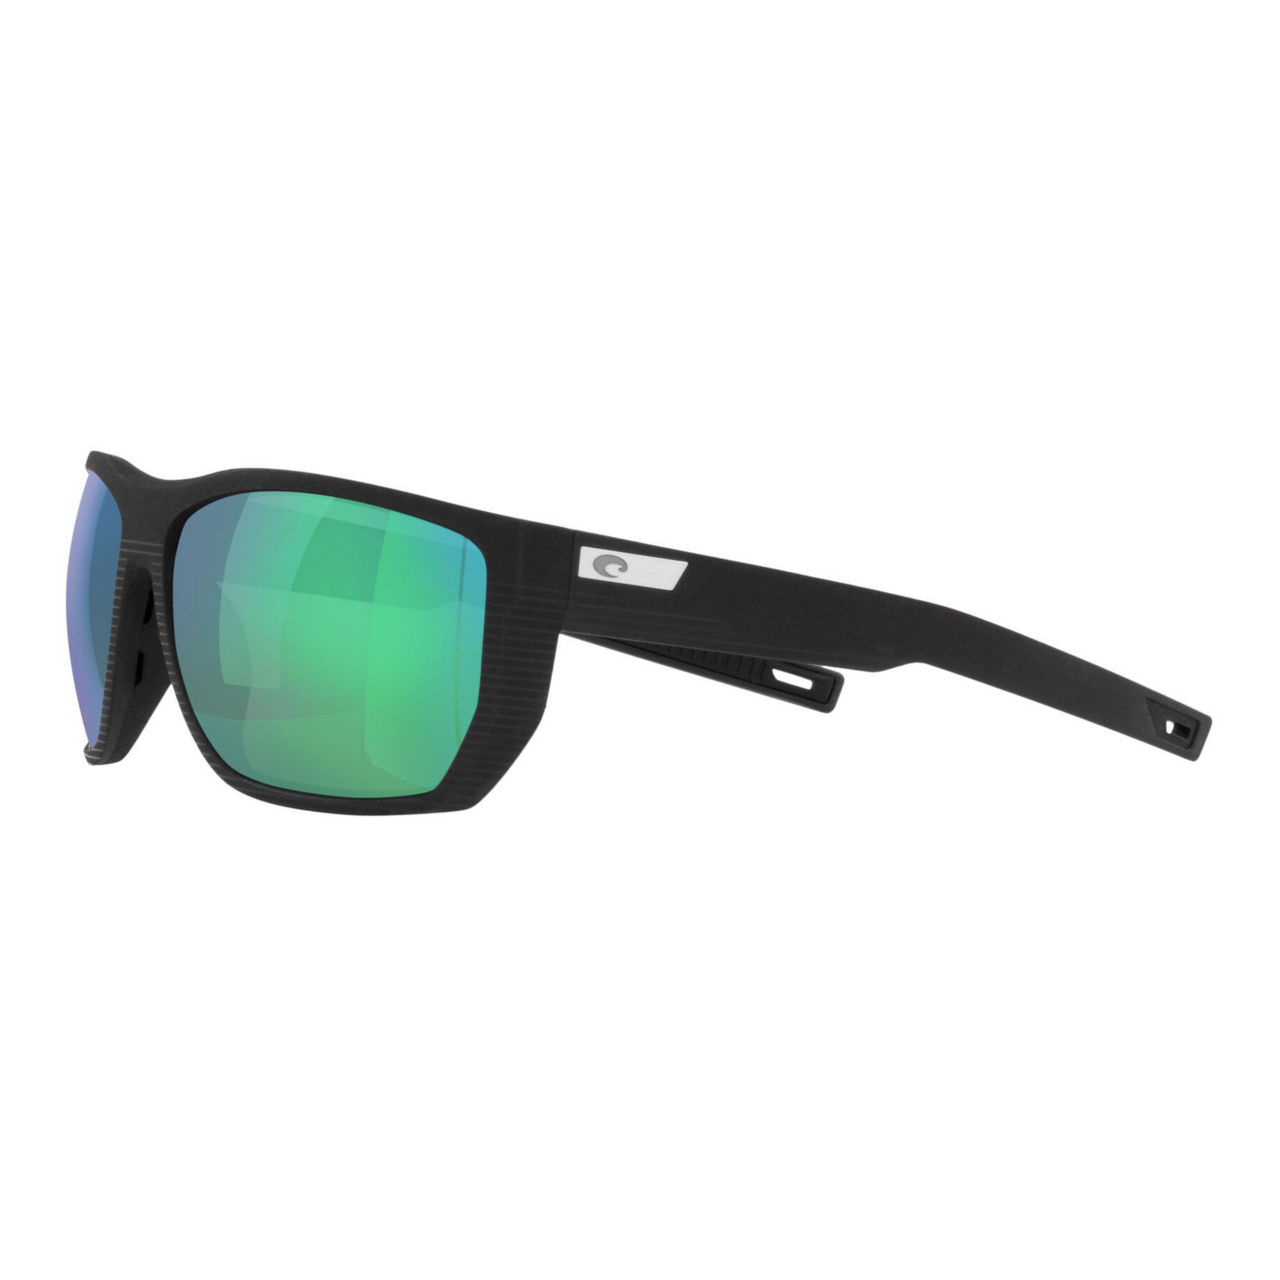 Costa® Santiago Sunglasses - NET GRAY/GREEN MIRROR image number 1